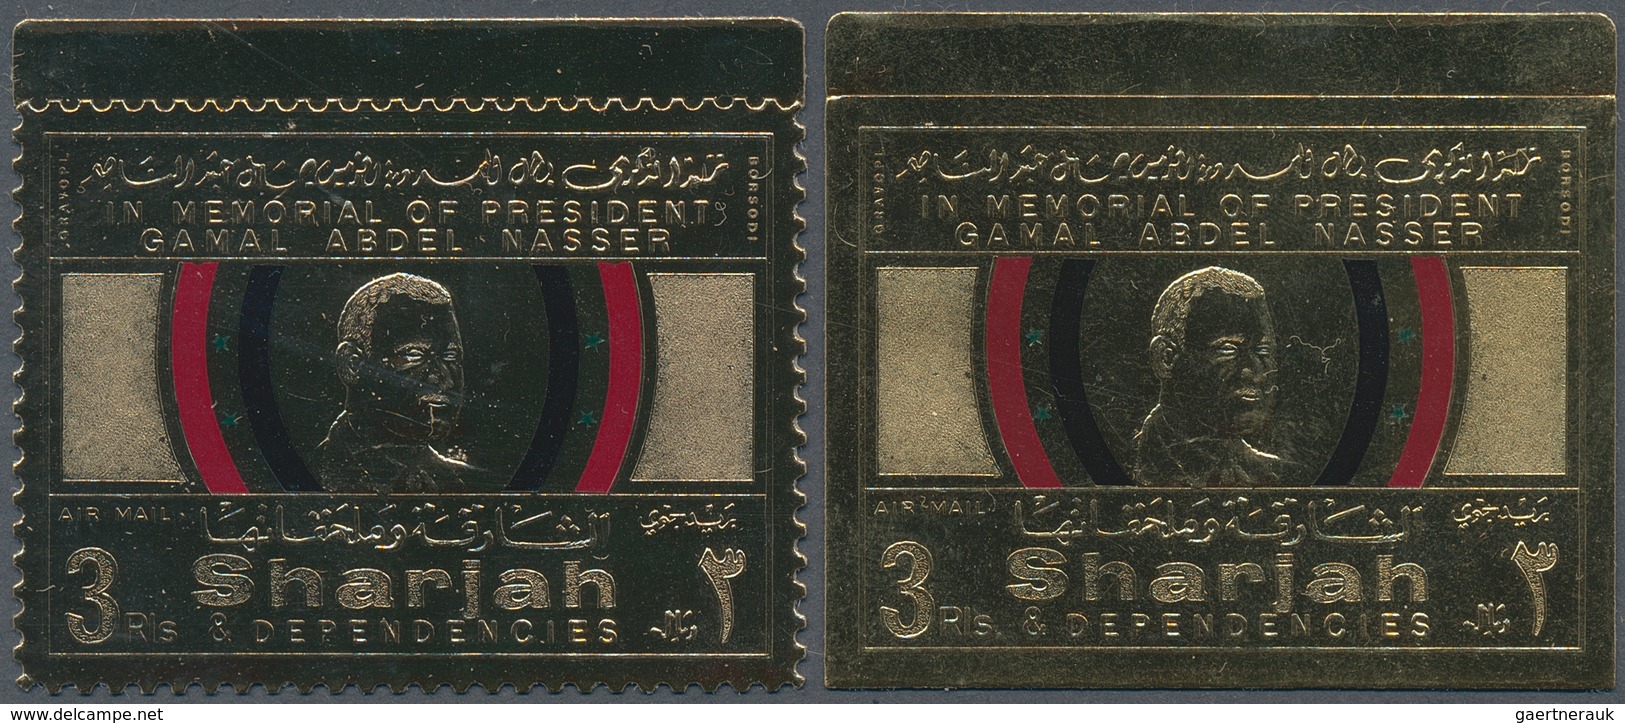 Schardscha / Sharjah: 1970 (ca.), Prominent Persons 'In Memoriam President NASSER' Gold Foil Stamps - Sharjah